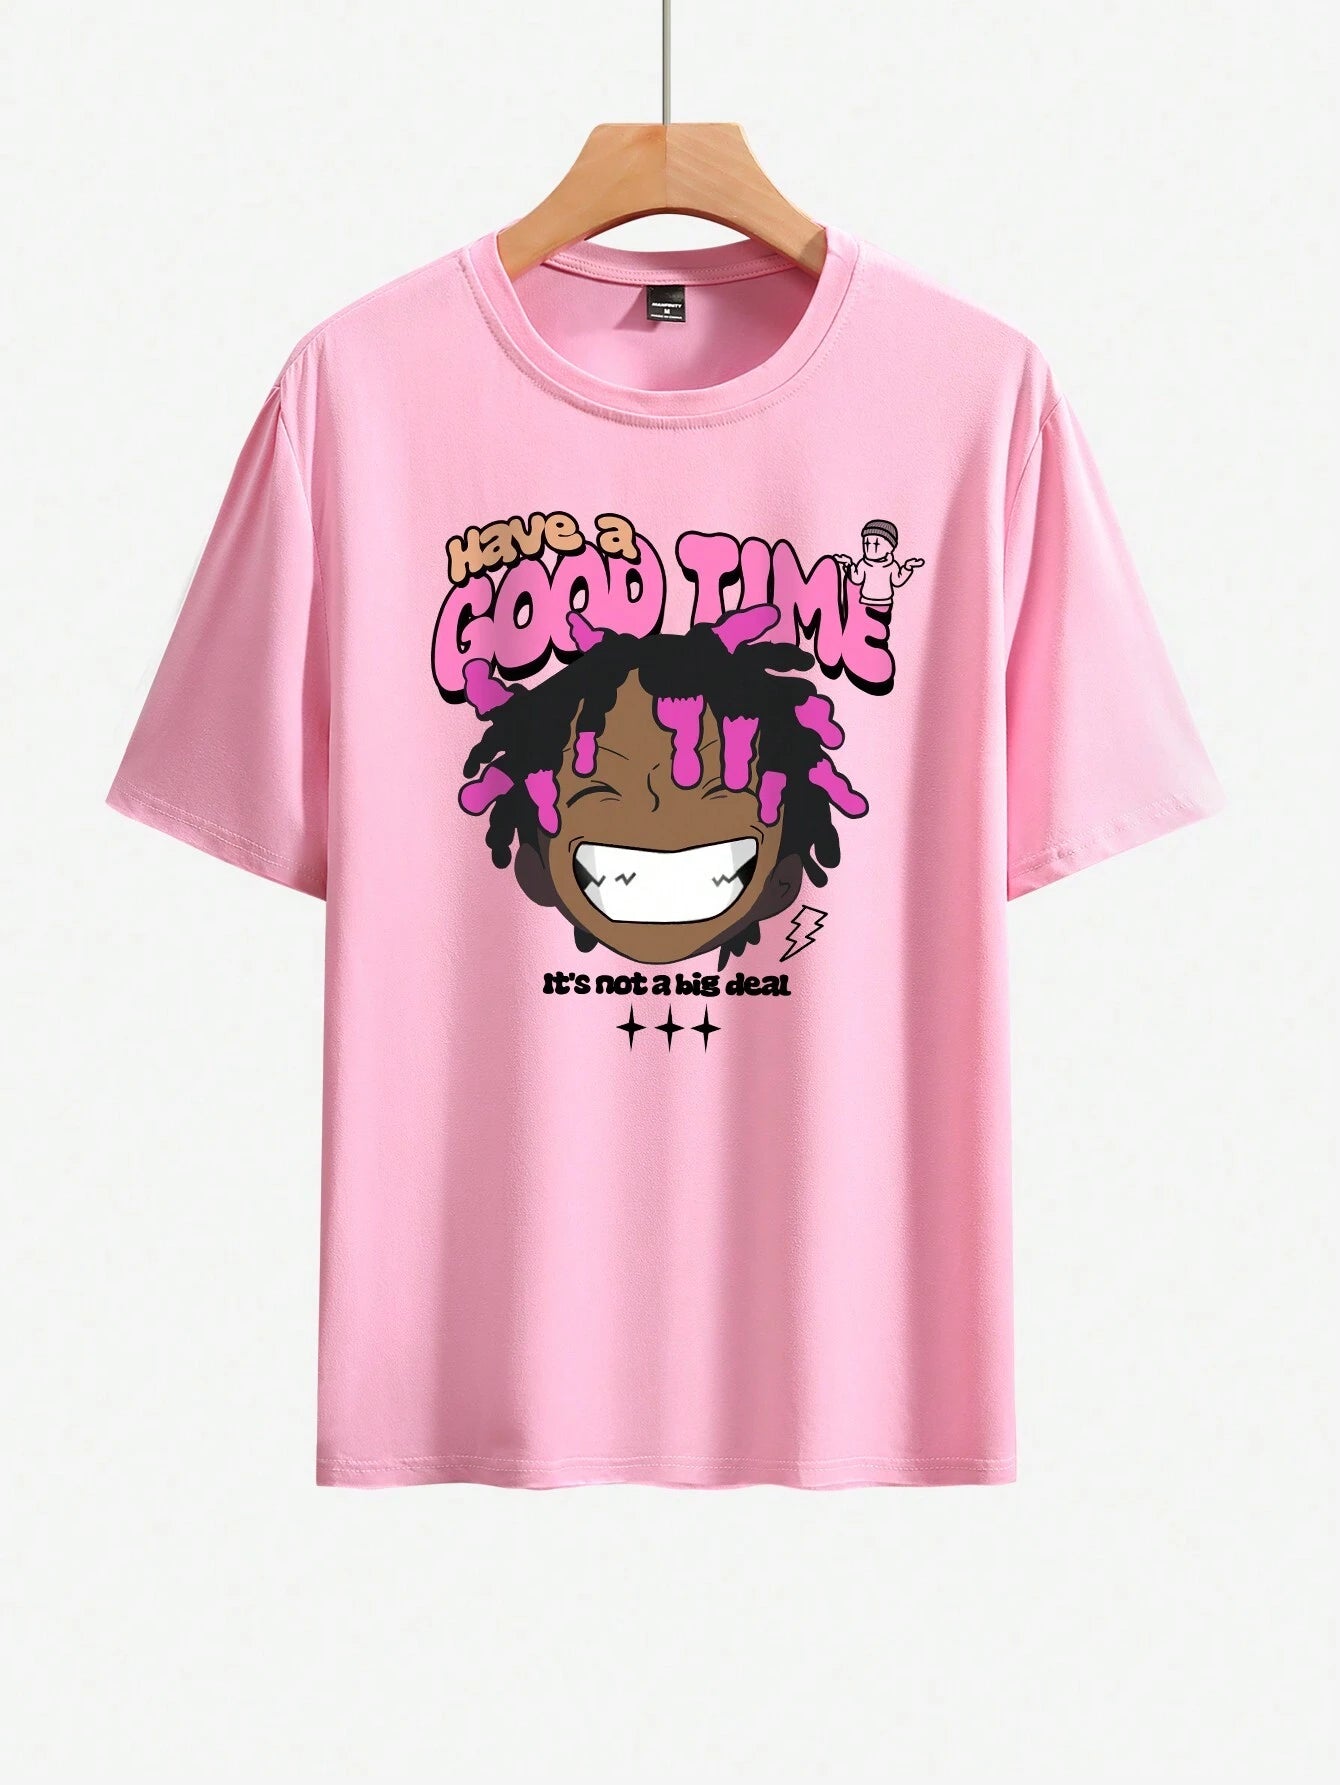 Men's Cartoon Character & Slogan Printed T-Shirt